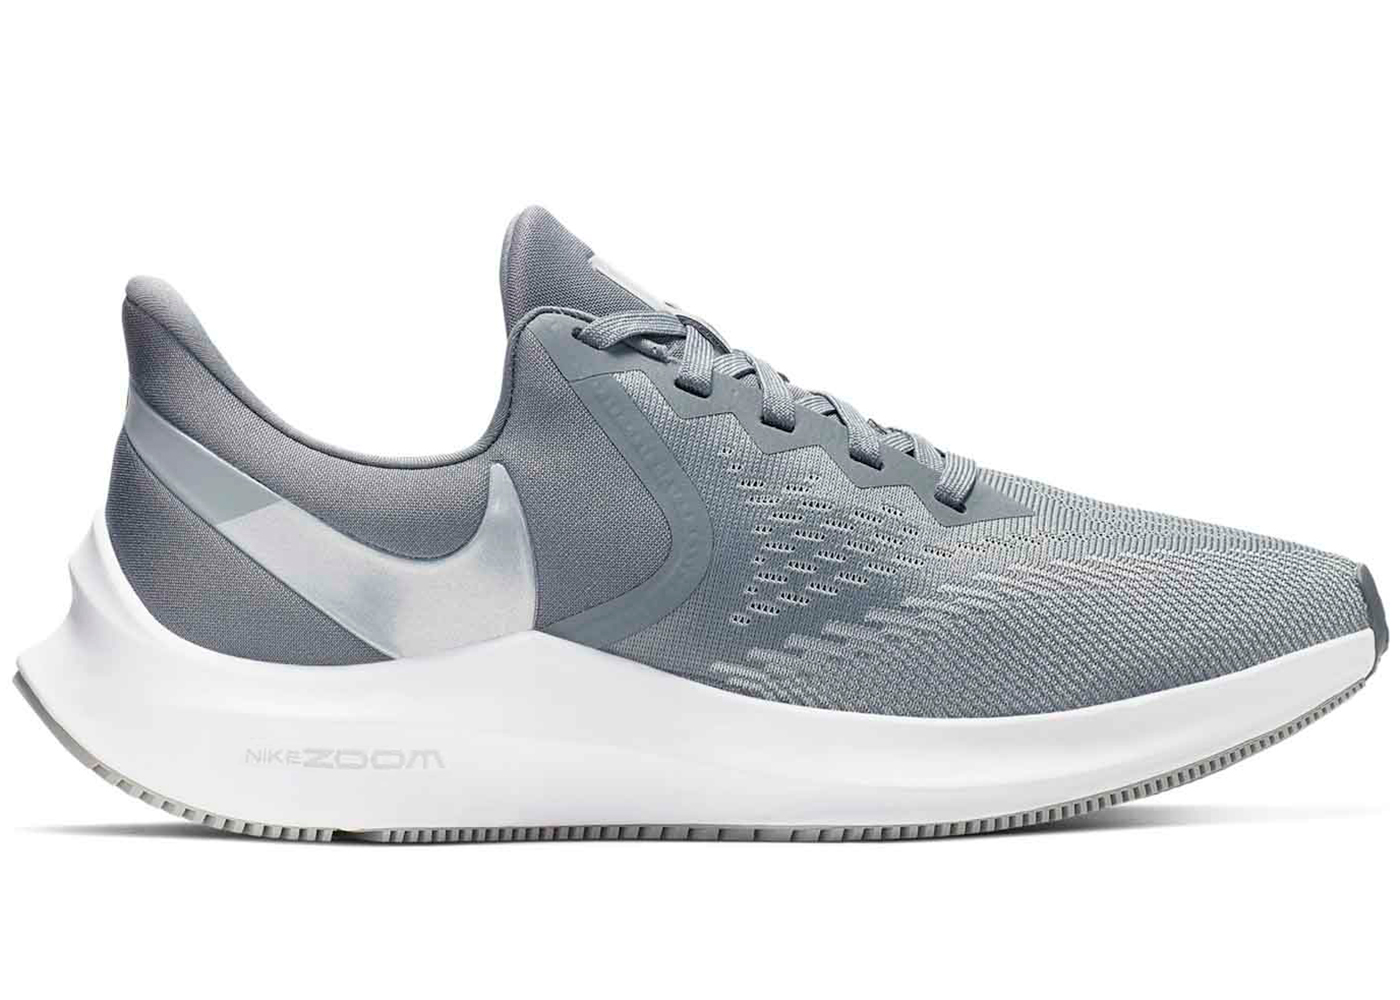 Nike Air Zoom Winflo 6 Cool Grey (Women's) - AQ8228-002 - US